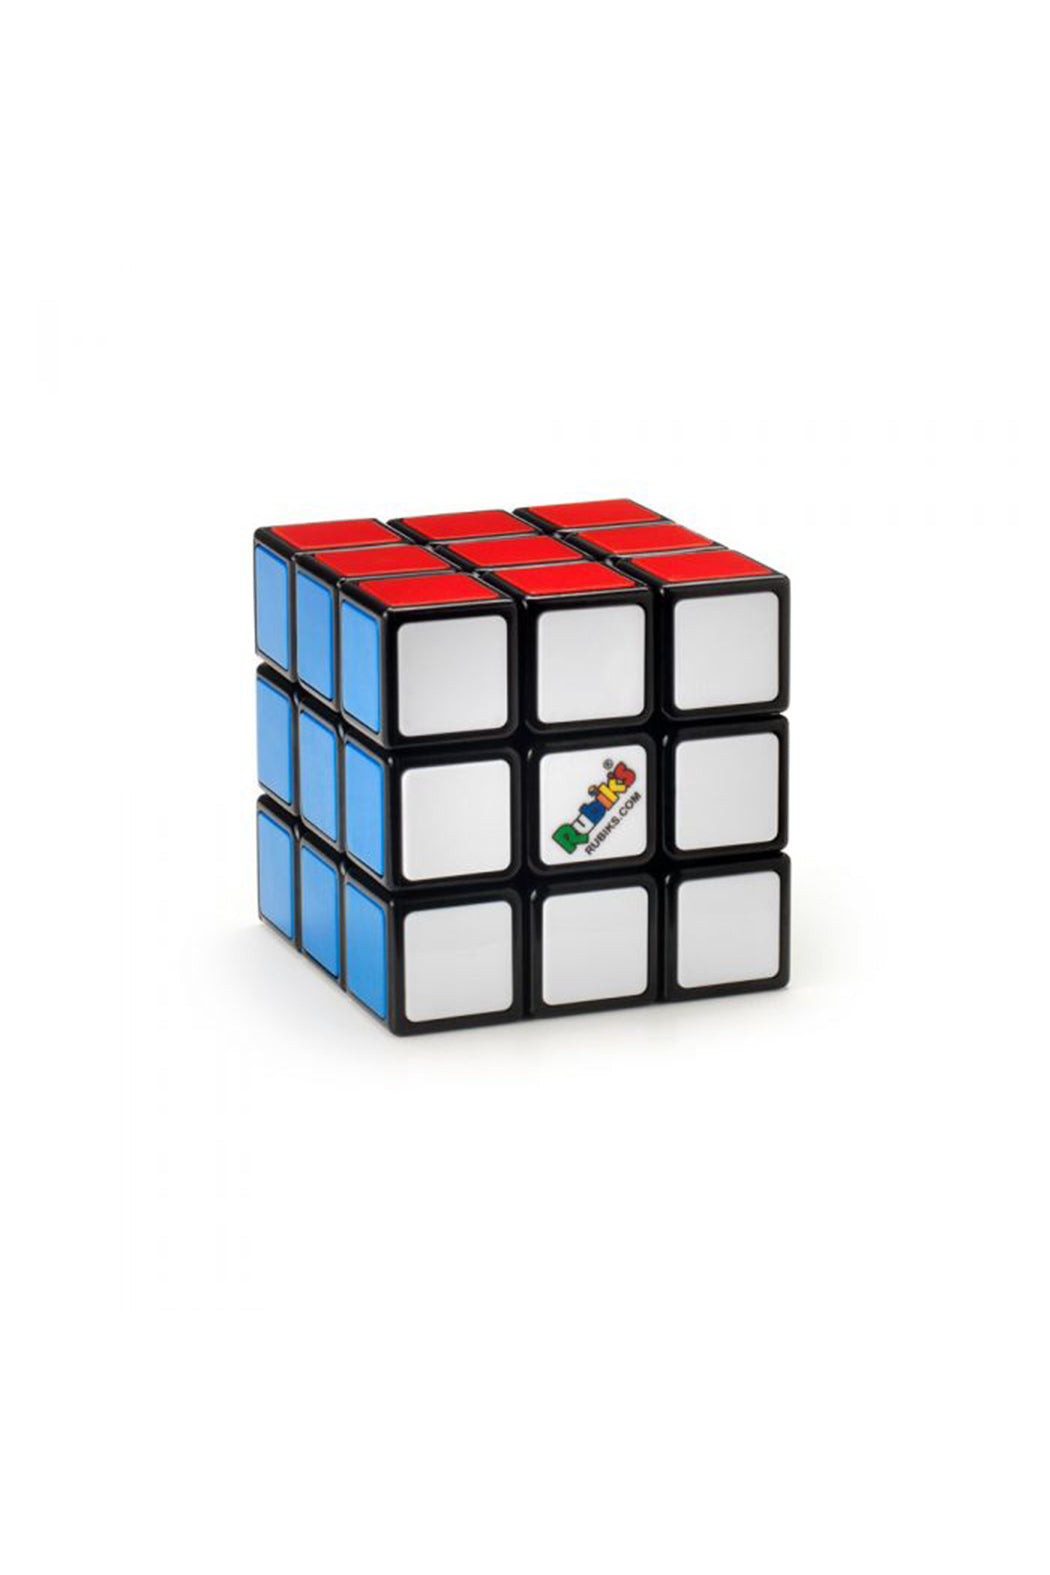 Rubik's Cube 3x3 (The Original) - Winning Moves